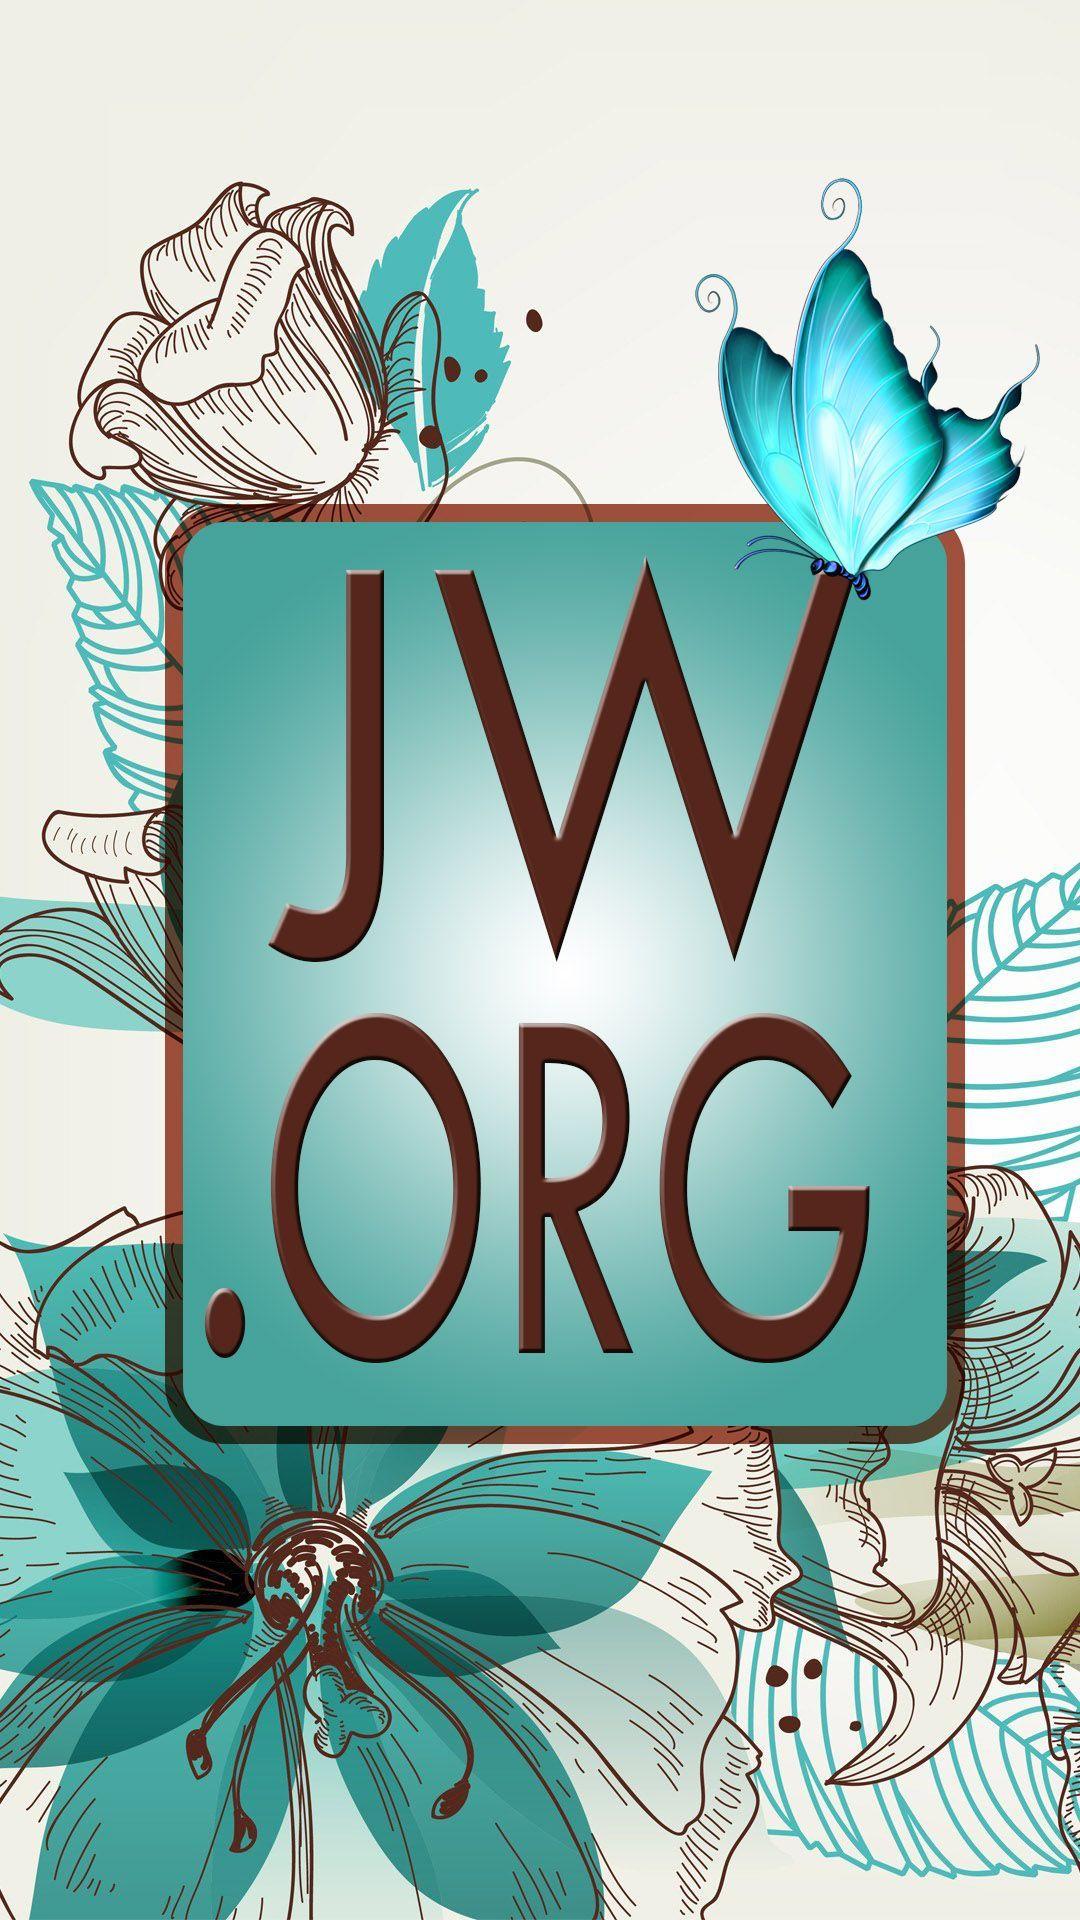 Loida Avanceña Design my latest design in promoting our website jw